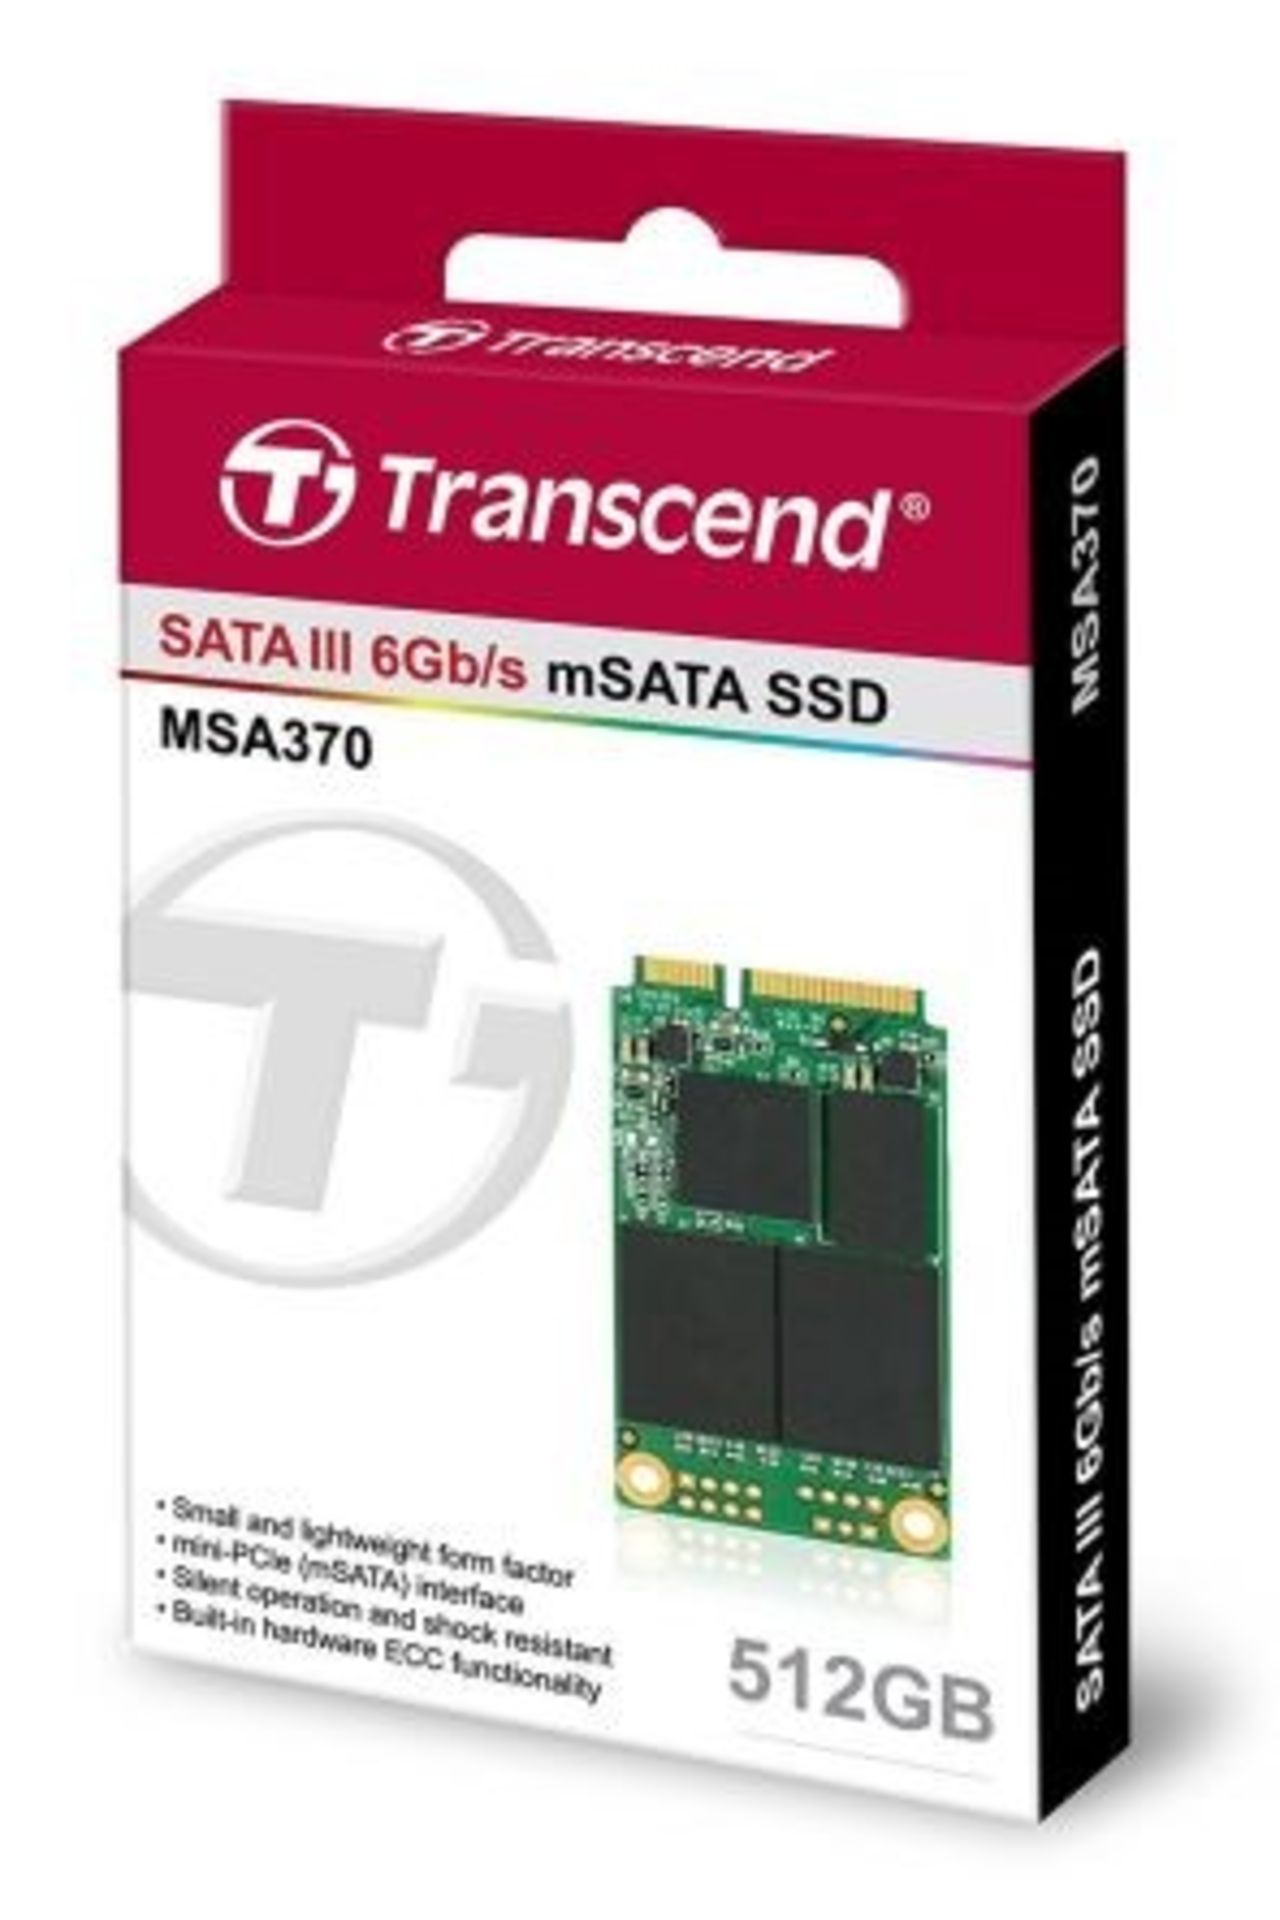 8 x Transcend MAS370 MSATA 512 GB Industrial SSD Hard Drive - Image 2 of 2